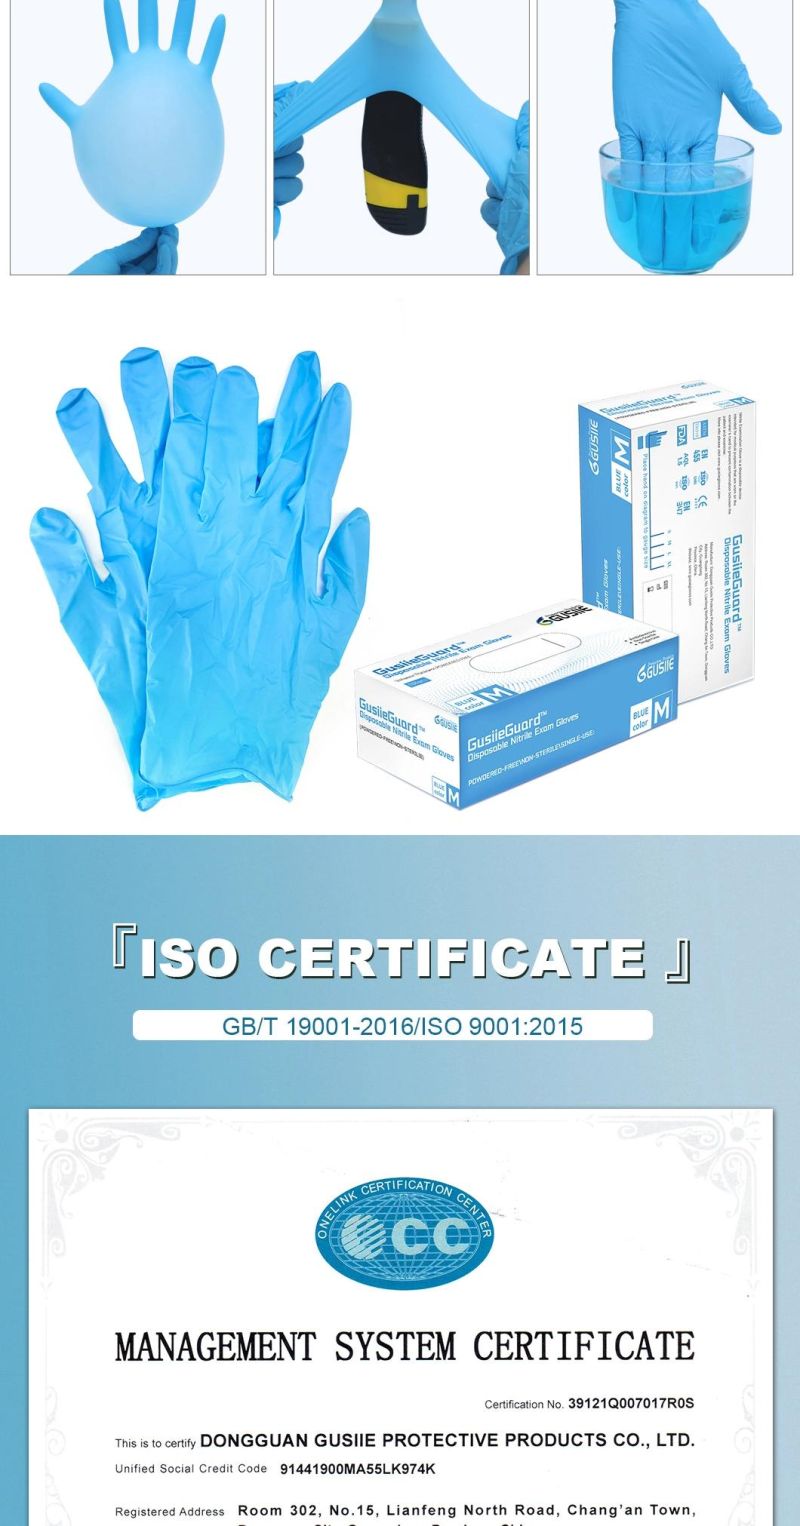 Gusiie Nitrile Glove Powder Free Nitrile Disposable Medical Examination Gloves